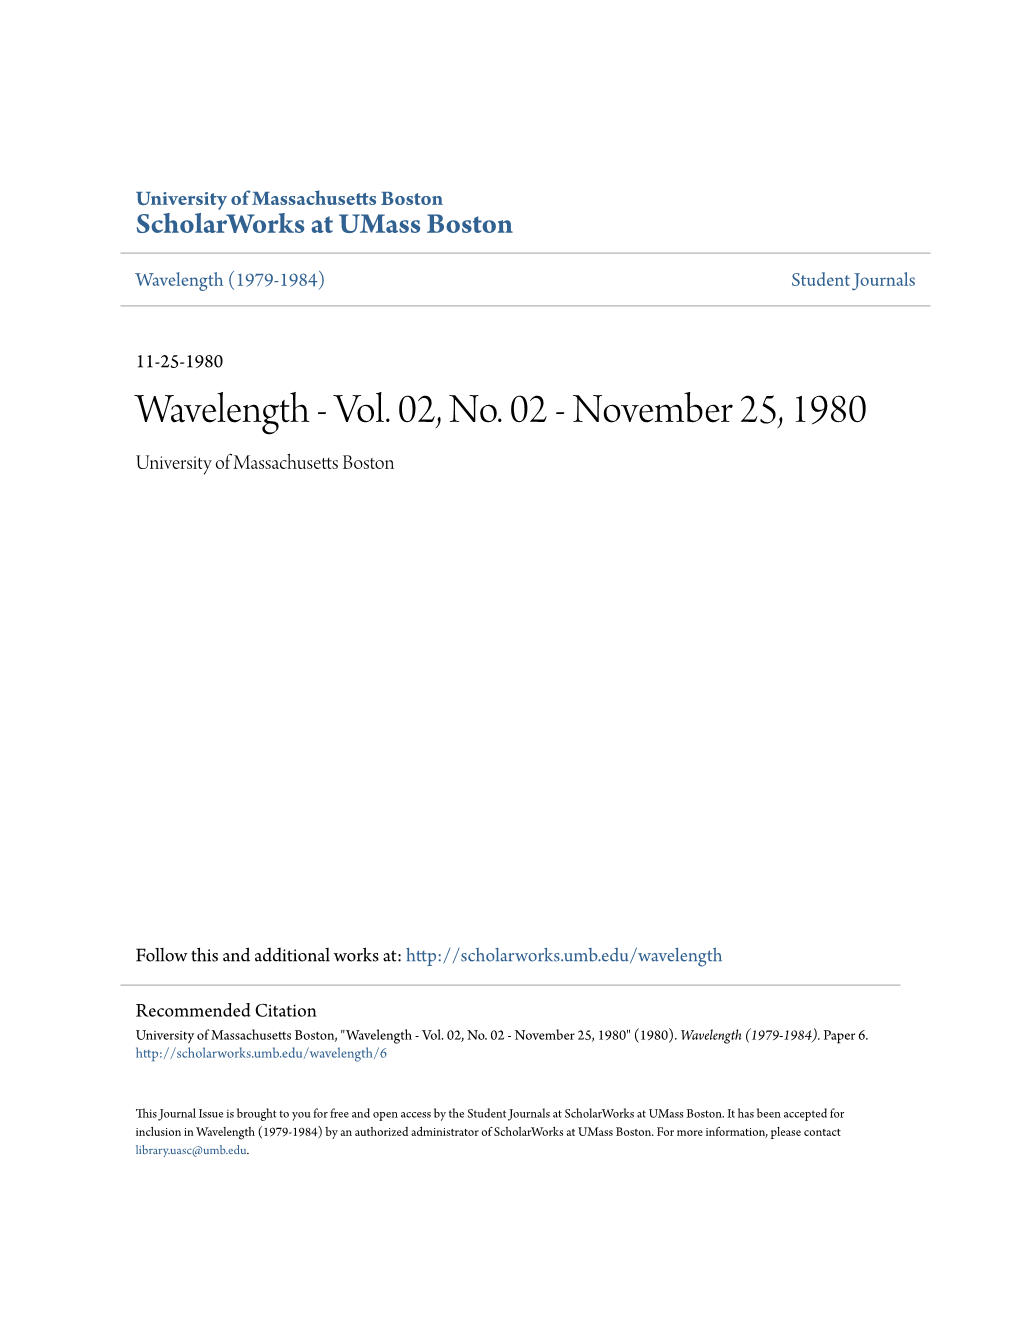 Wavelength (1979-1984) Student Journals